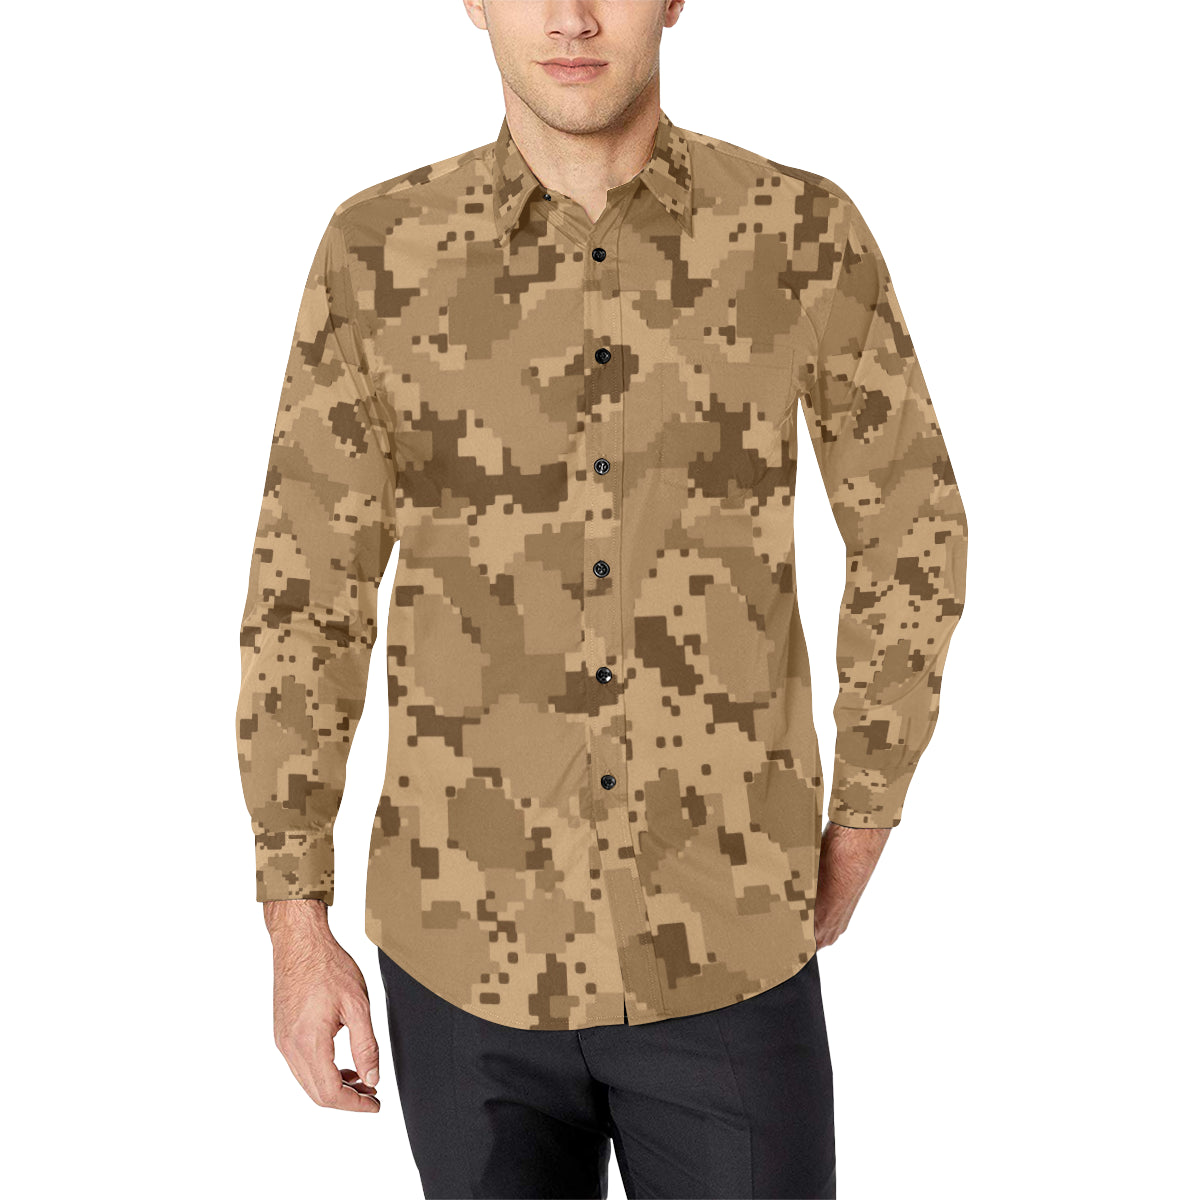 ACU Desert Digital Pattern Print Design 01 Men's Long Sleeve Shirt